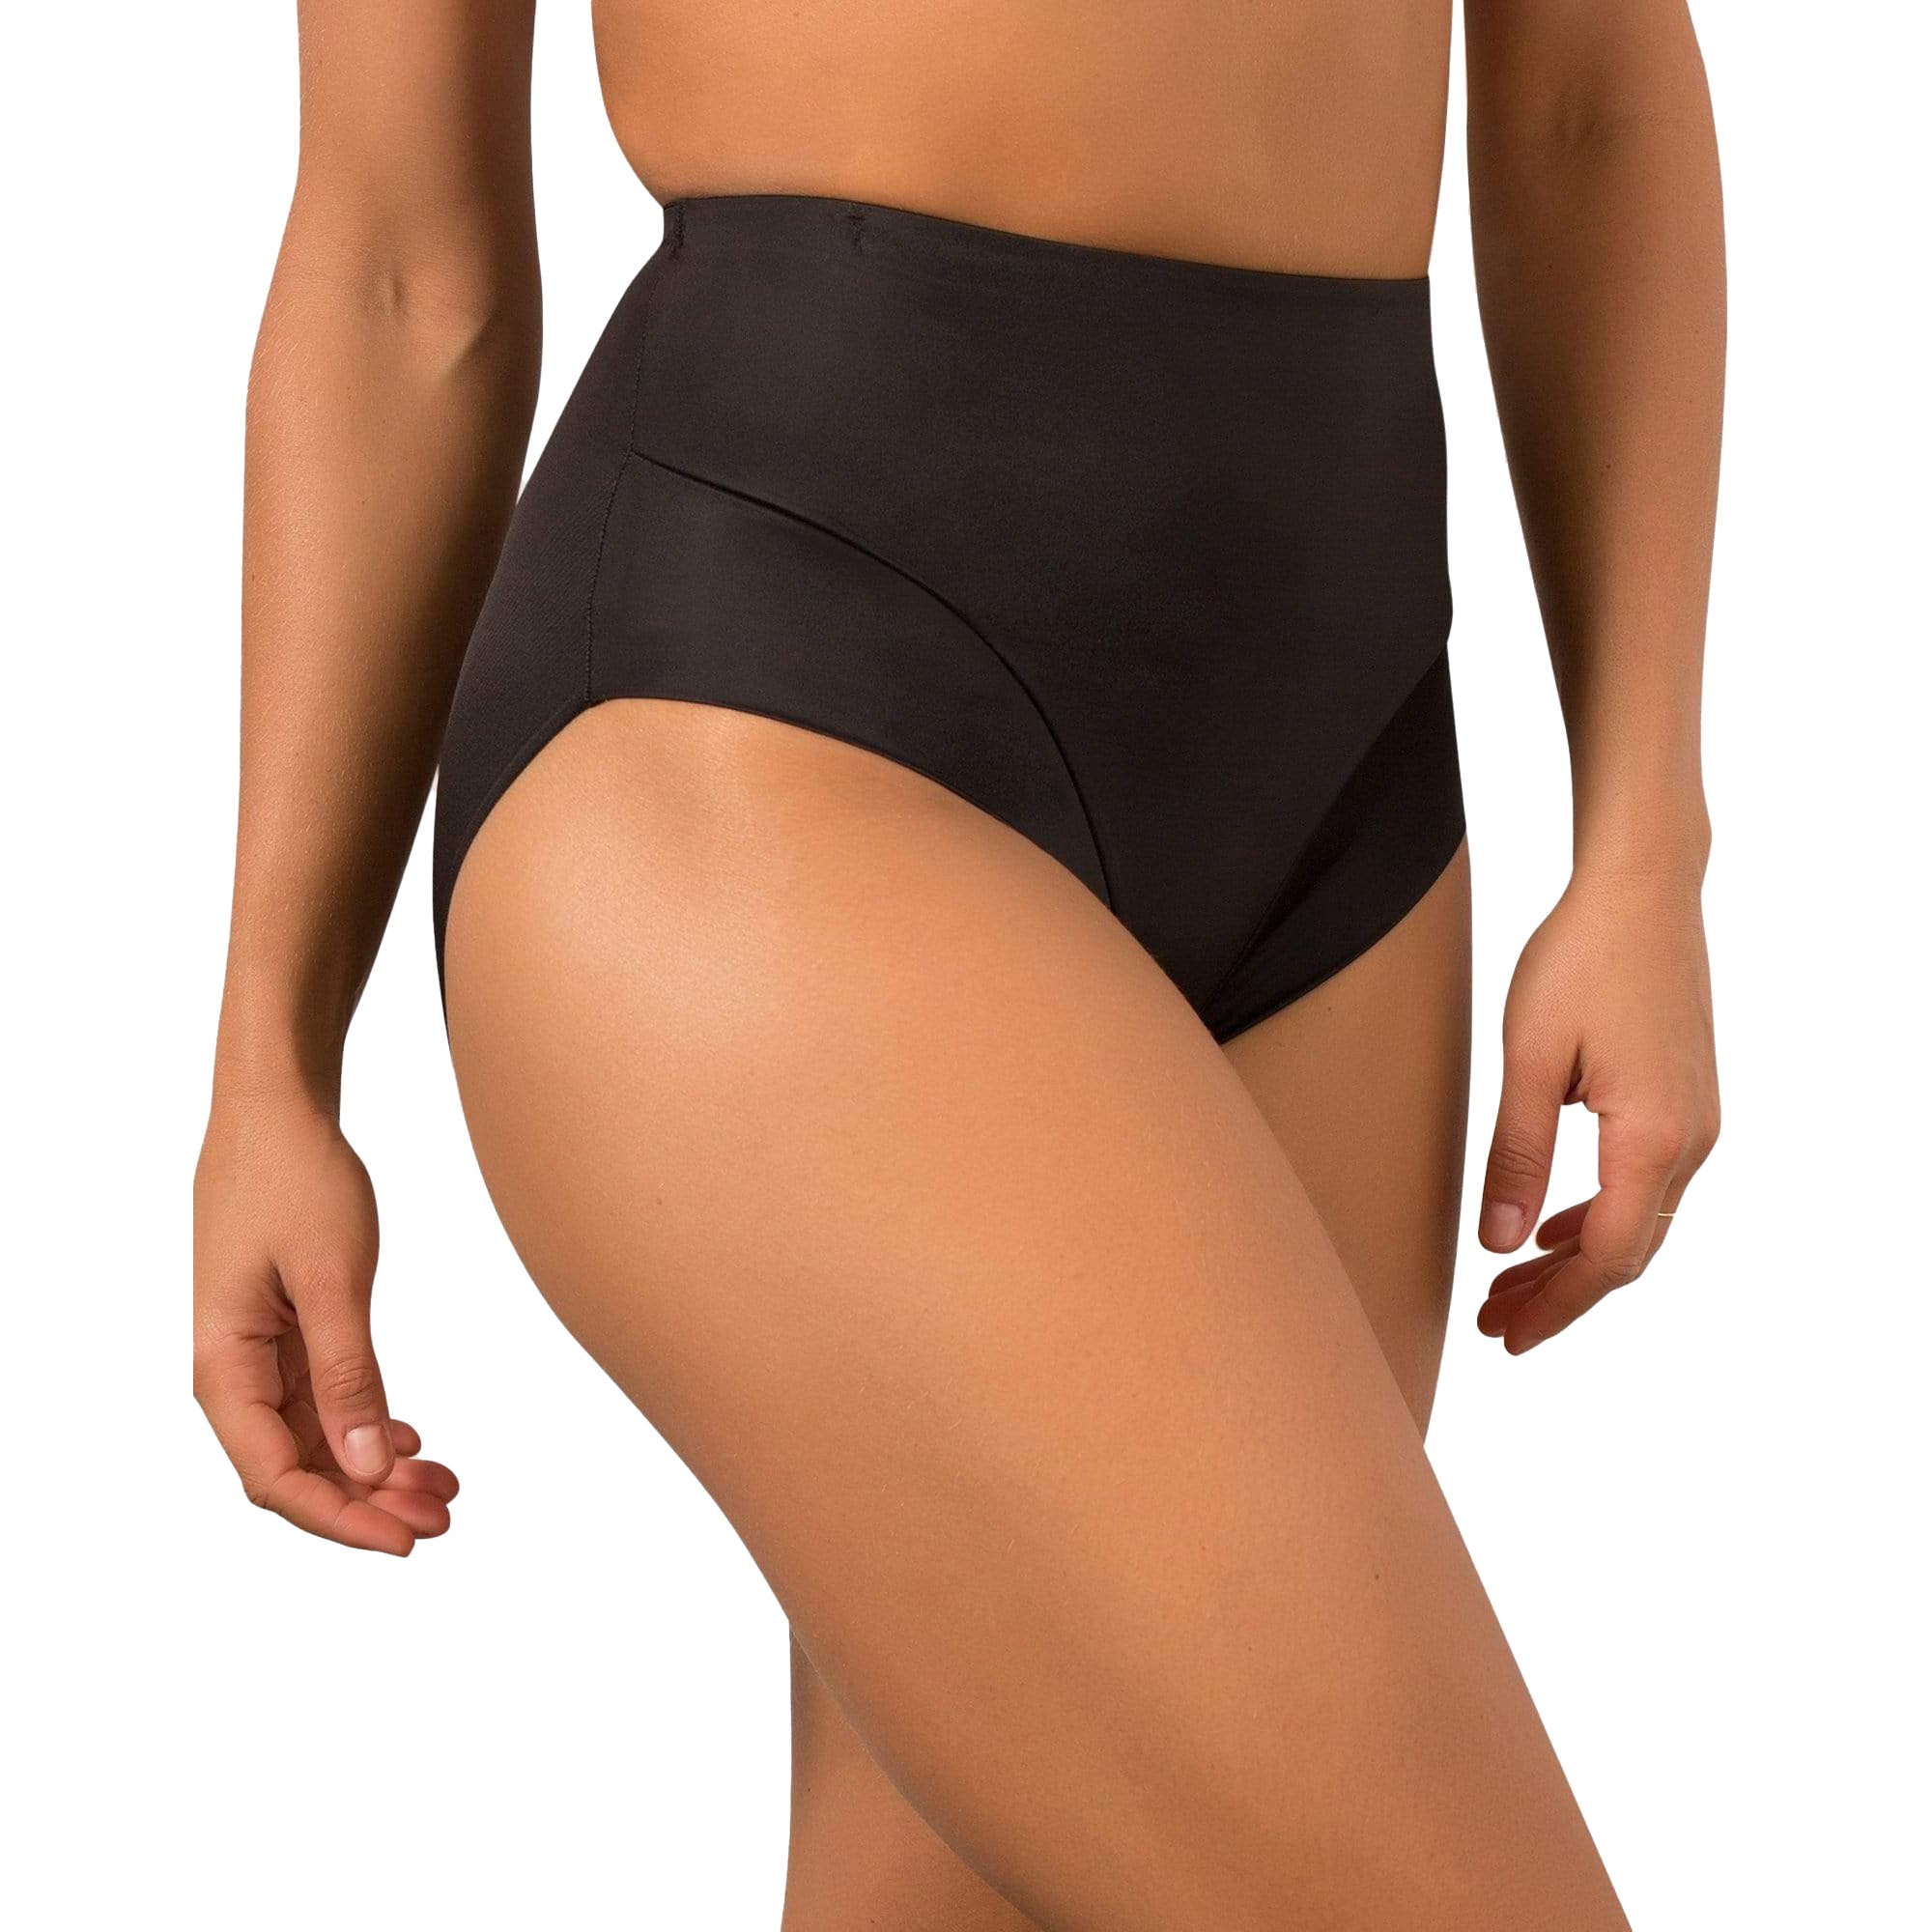 NAUTICA INTIMATES SHAPEWEAR Seamless Black High Waist Panty Women's Size  Medium $24.70 - PicClick